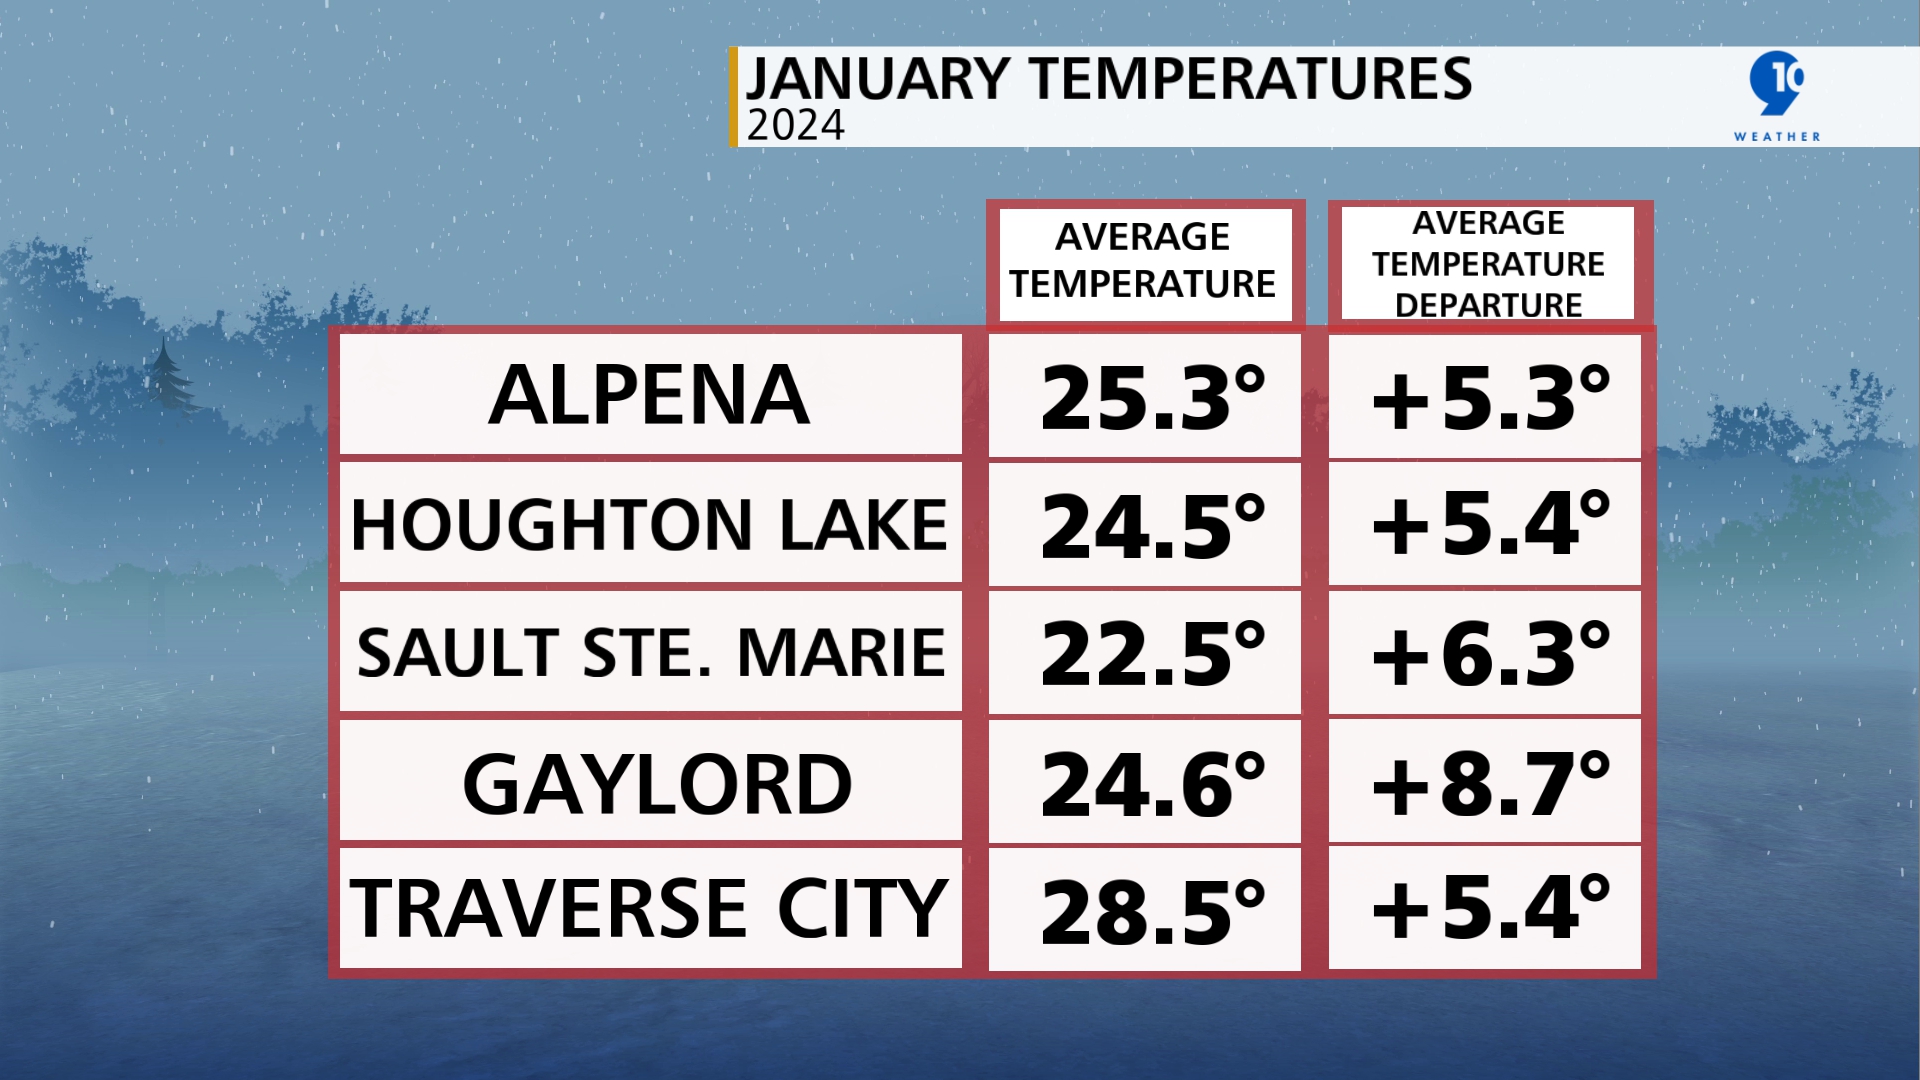 Average Temperatures and Average Temperature Departures for January 2024